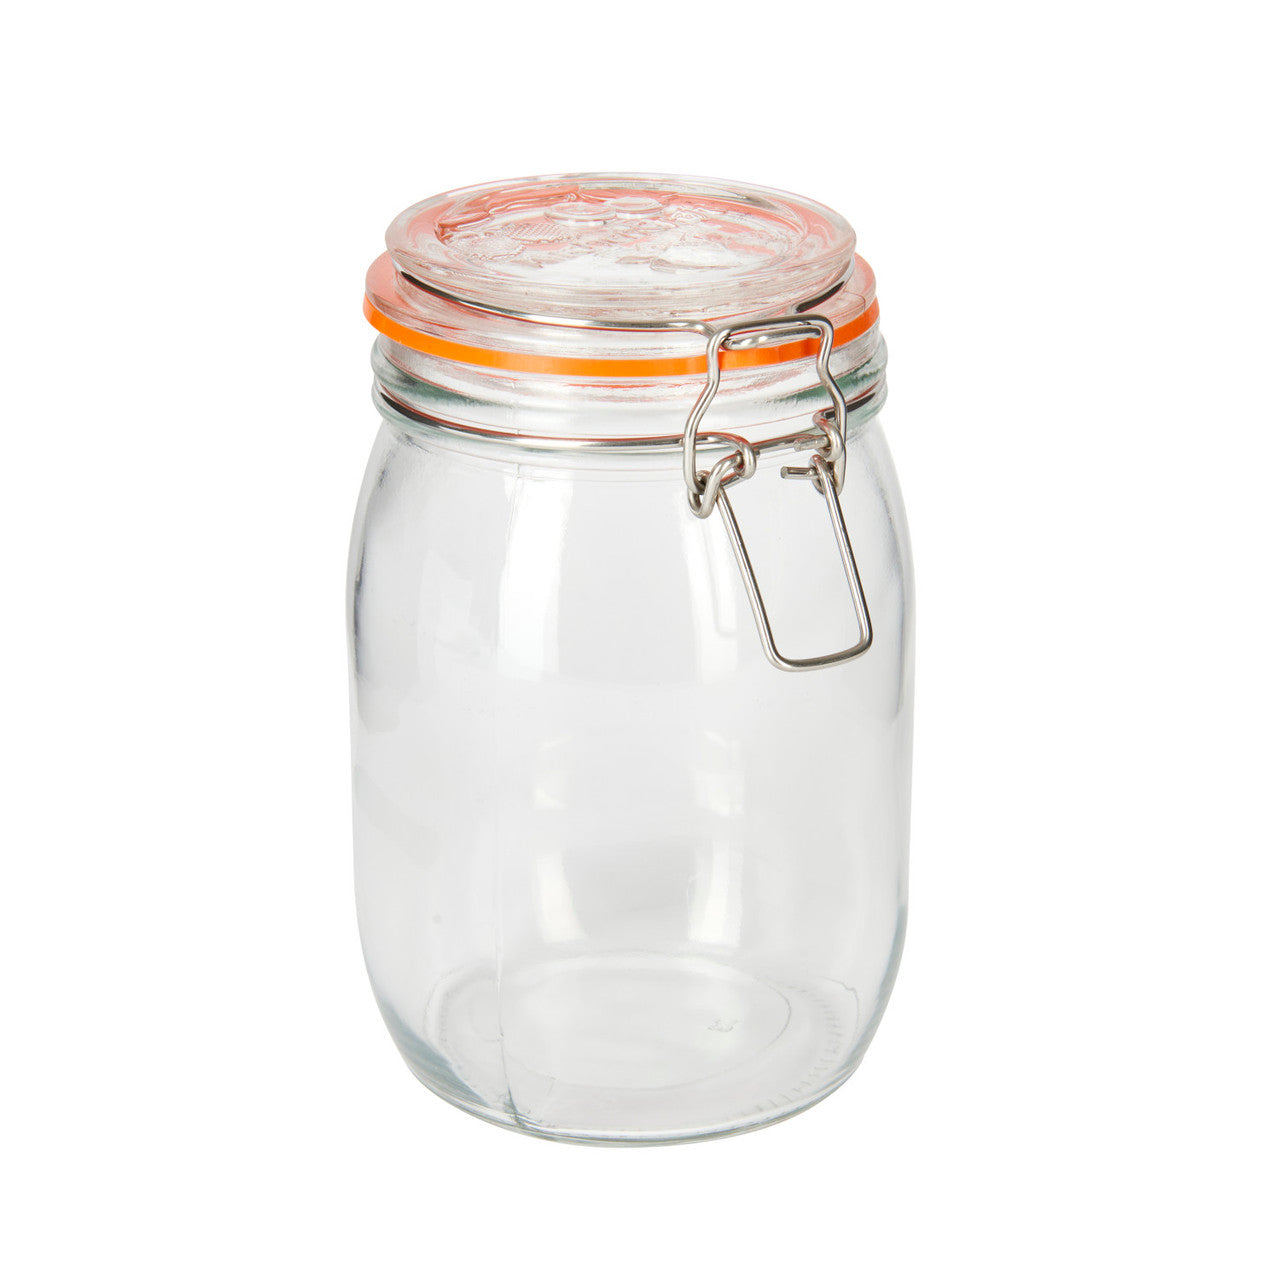 Home Made Kilner Glass Storage Jam Jar - 1 Ltr